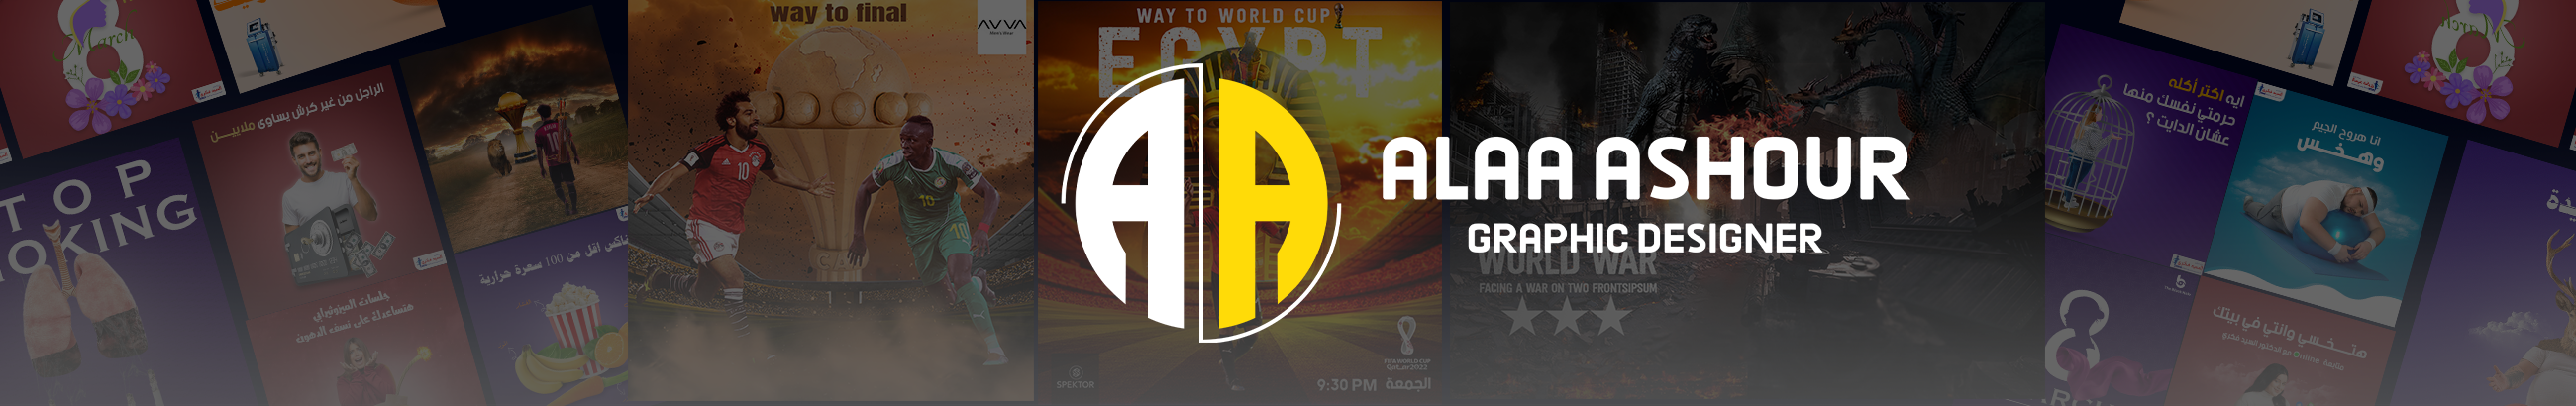 Banner de perfil de Alaa Ashour